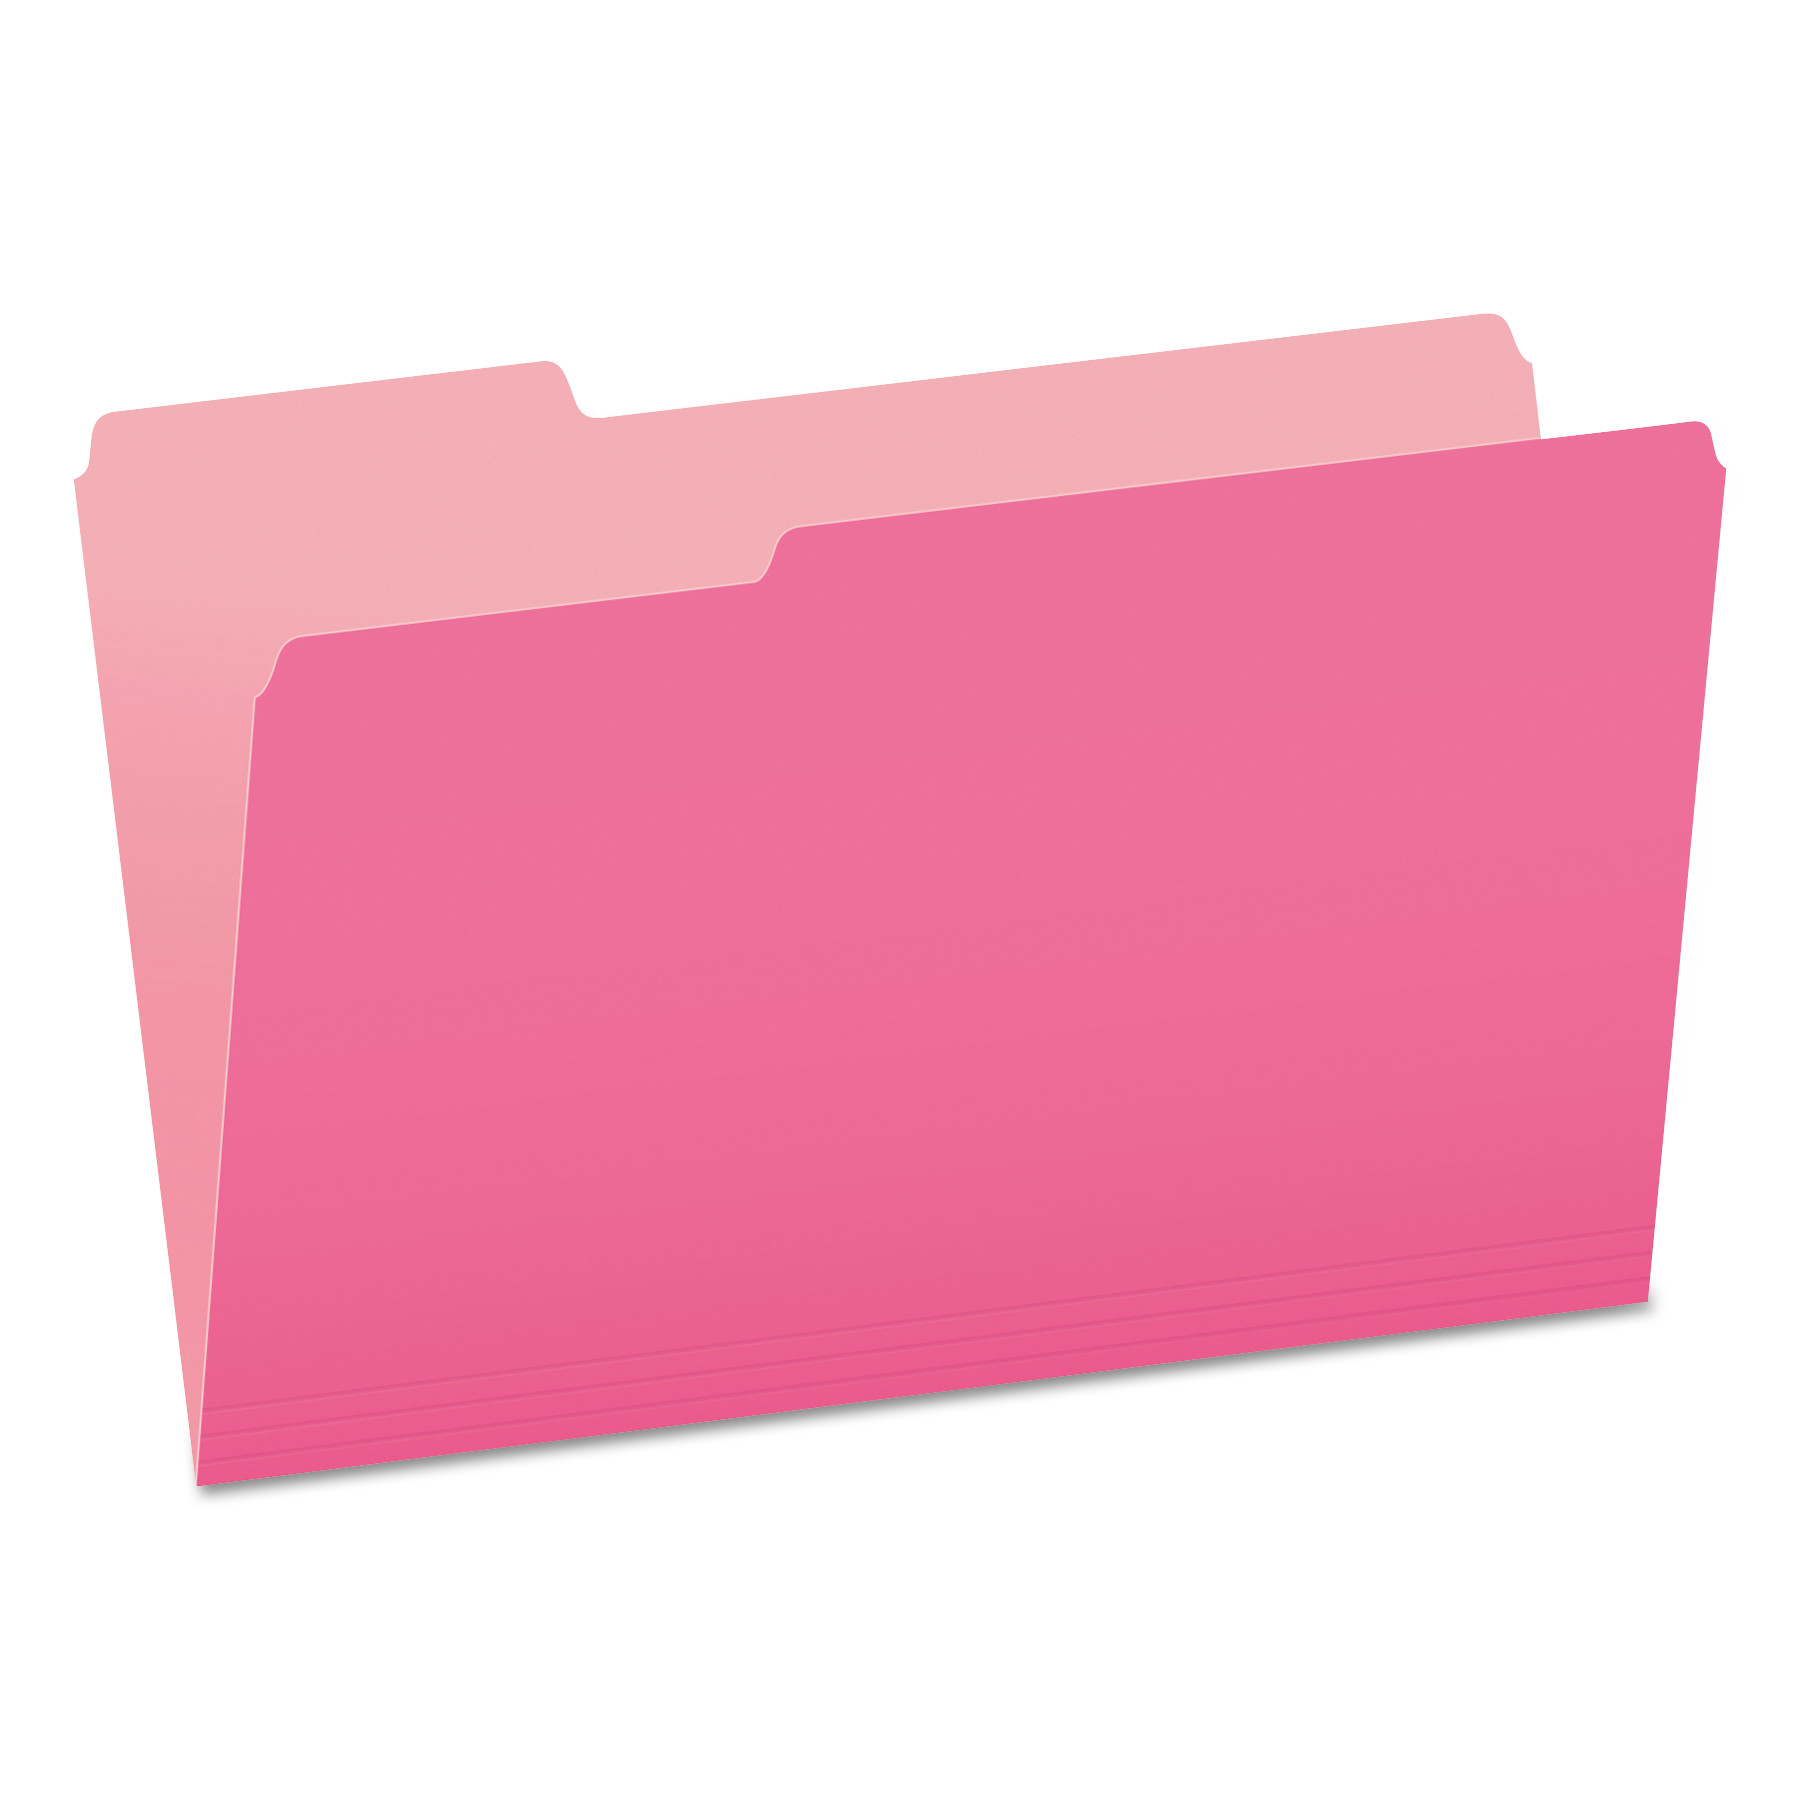  Pendaflex 153 1/3 PIN Colored File Folders, 1/3-Cut Tabs, Legal Size, Pink/Light Pink, 100/Box (PFX15313PIN) 